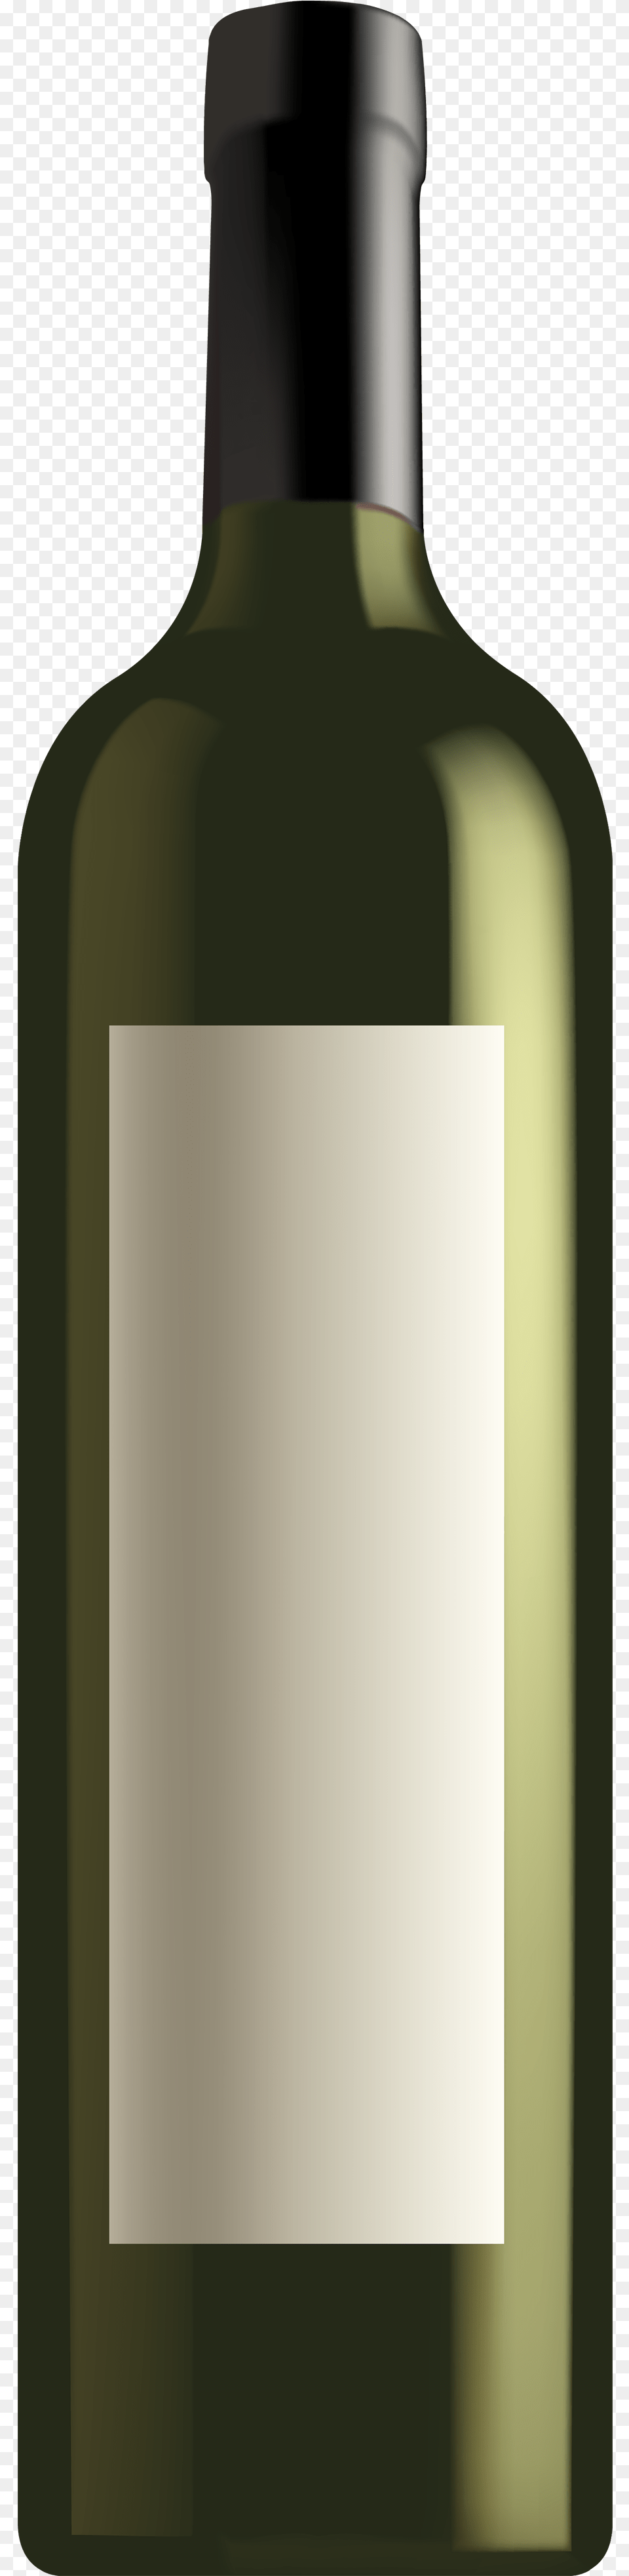 Wine Bottle Wine Clip Art Green Wine Bottle, Alcohol, Beverage, Liquor, Wine Bottle Png Image